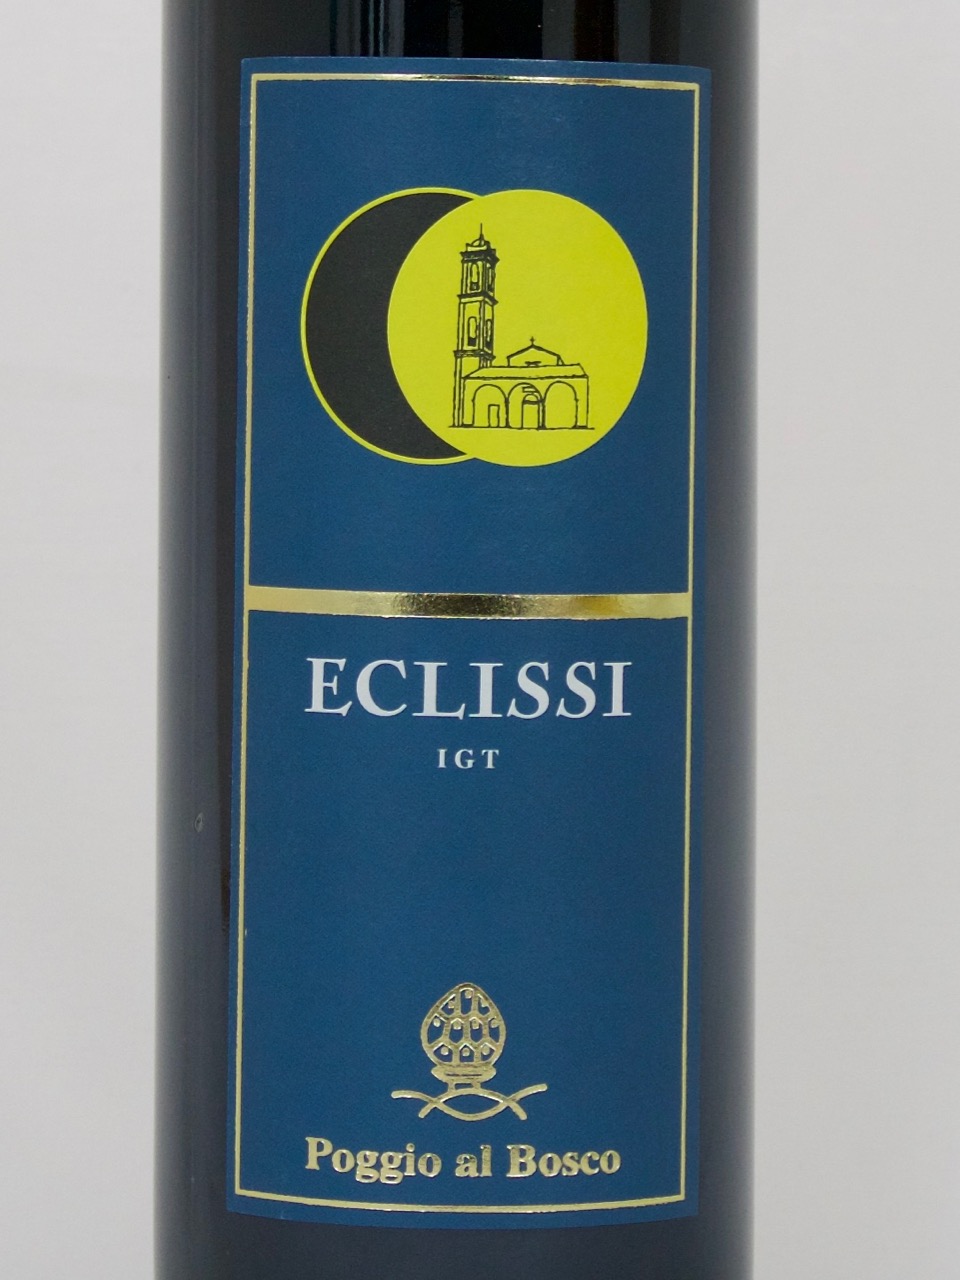 Eclissi IGT 2011 (13,5%Vol) <br /> Poggio al Bosco